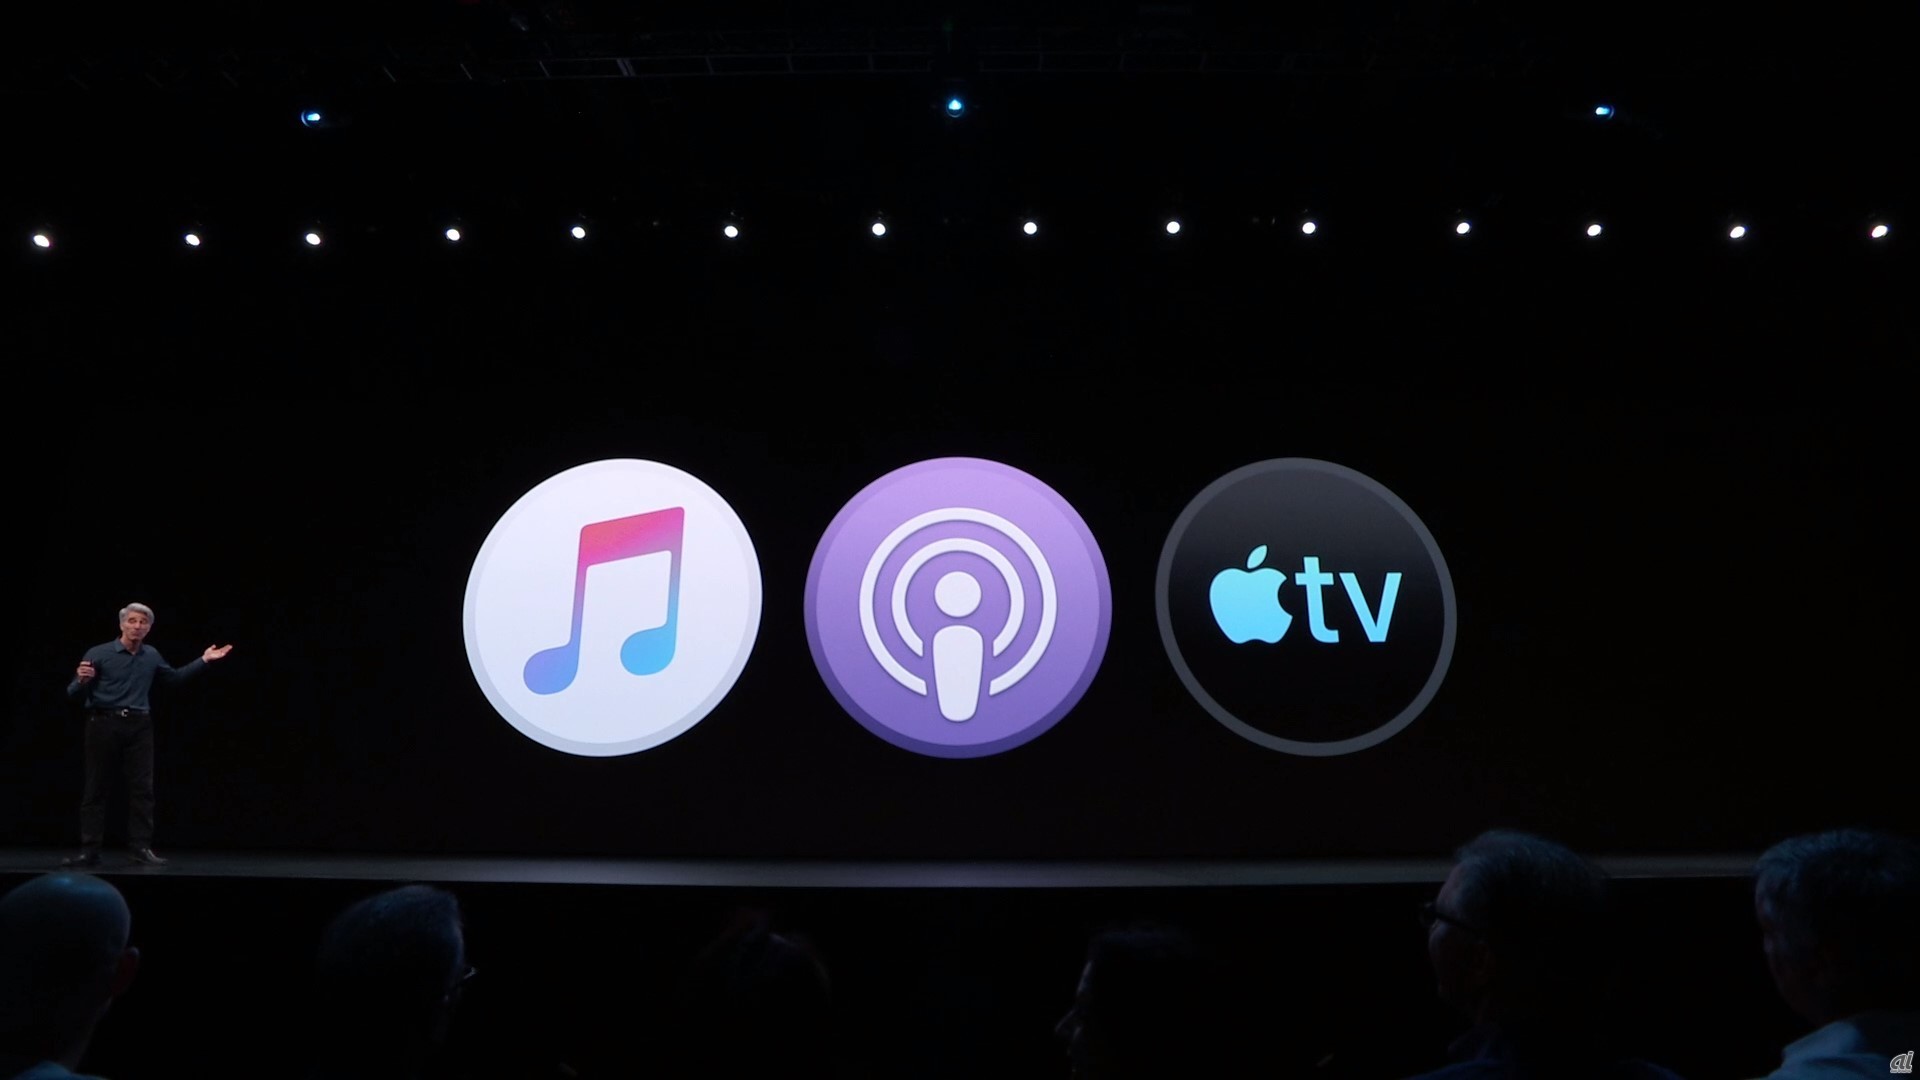 iTunesの機能は、Apple Music、Podcast、Apple TVの3アプリに分割